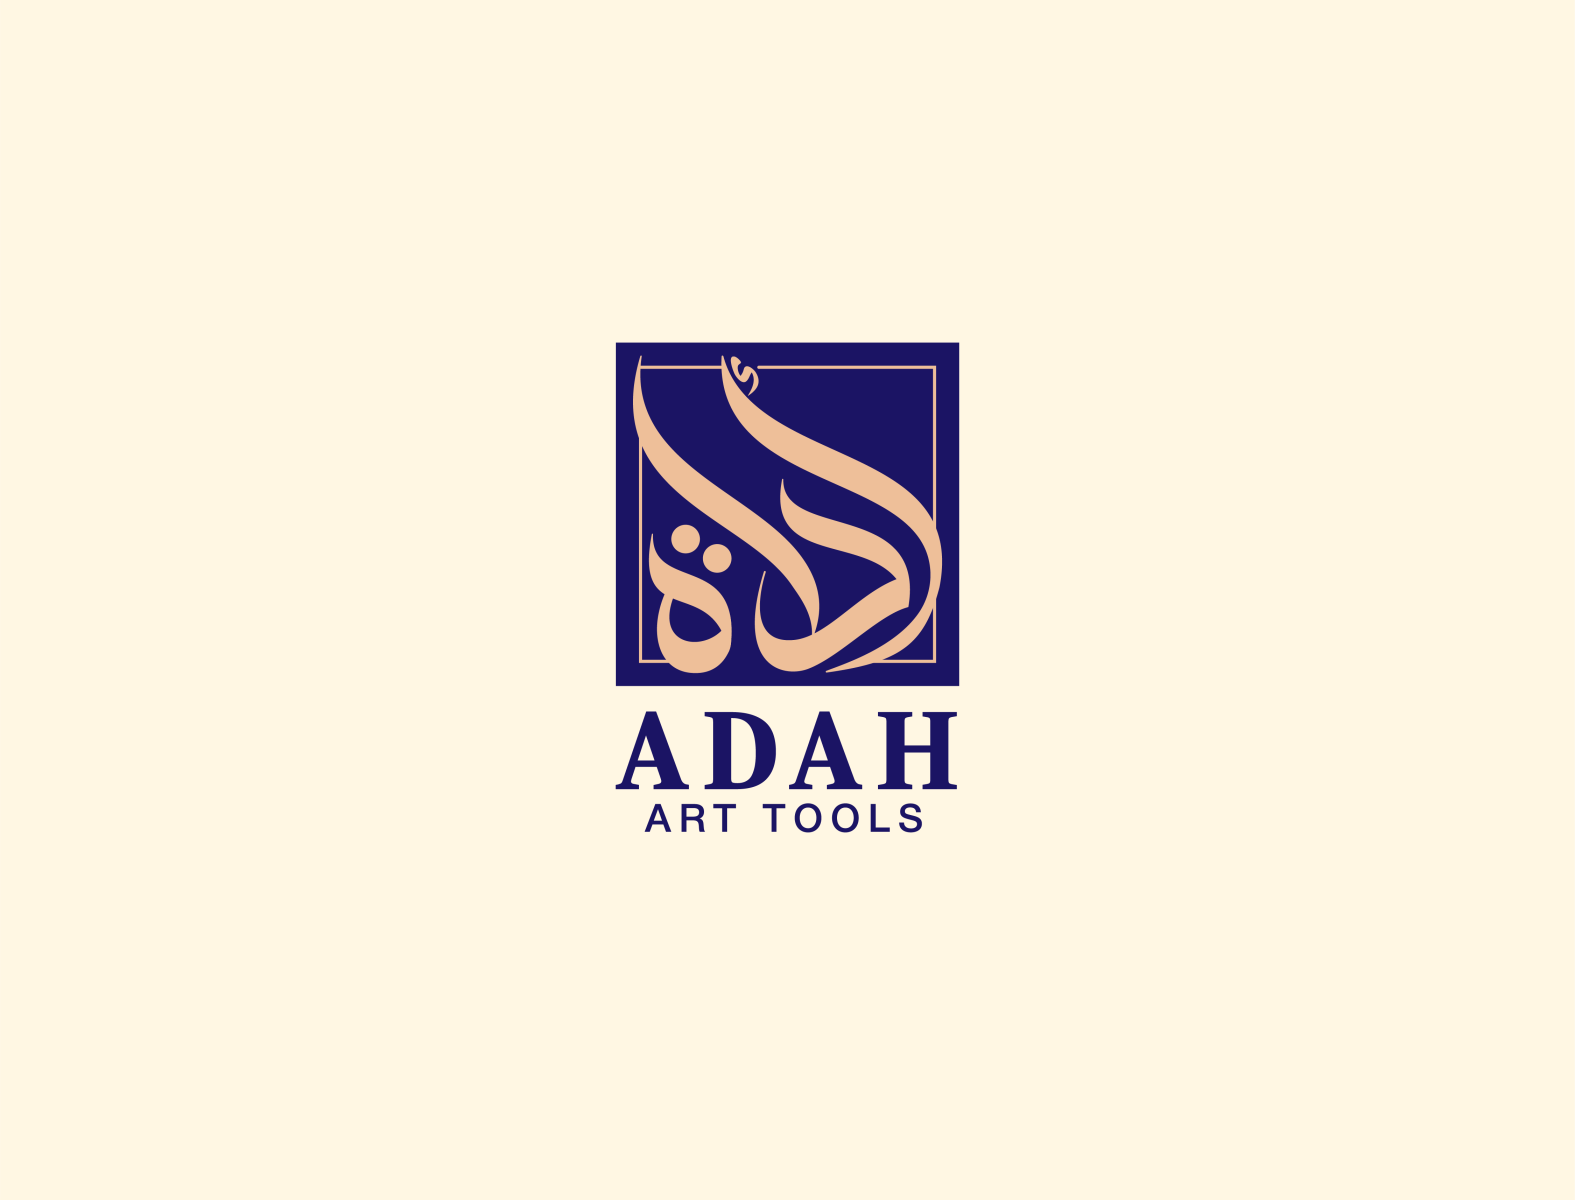 Adah by Abo Elhassan on Dribbble